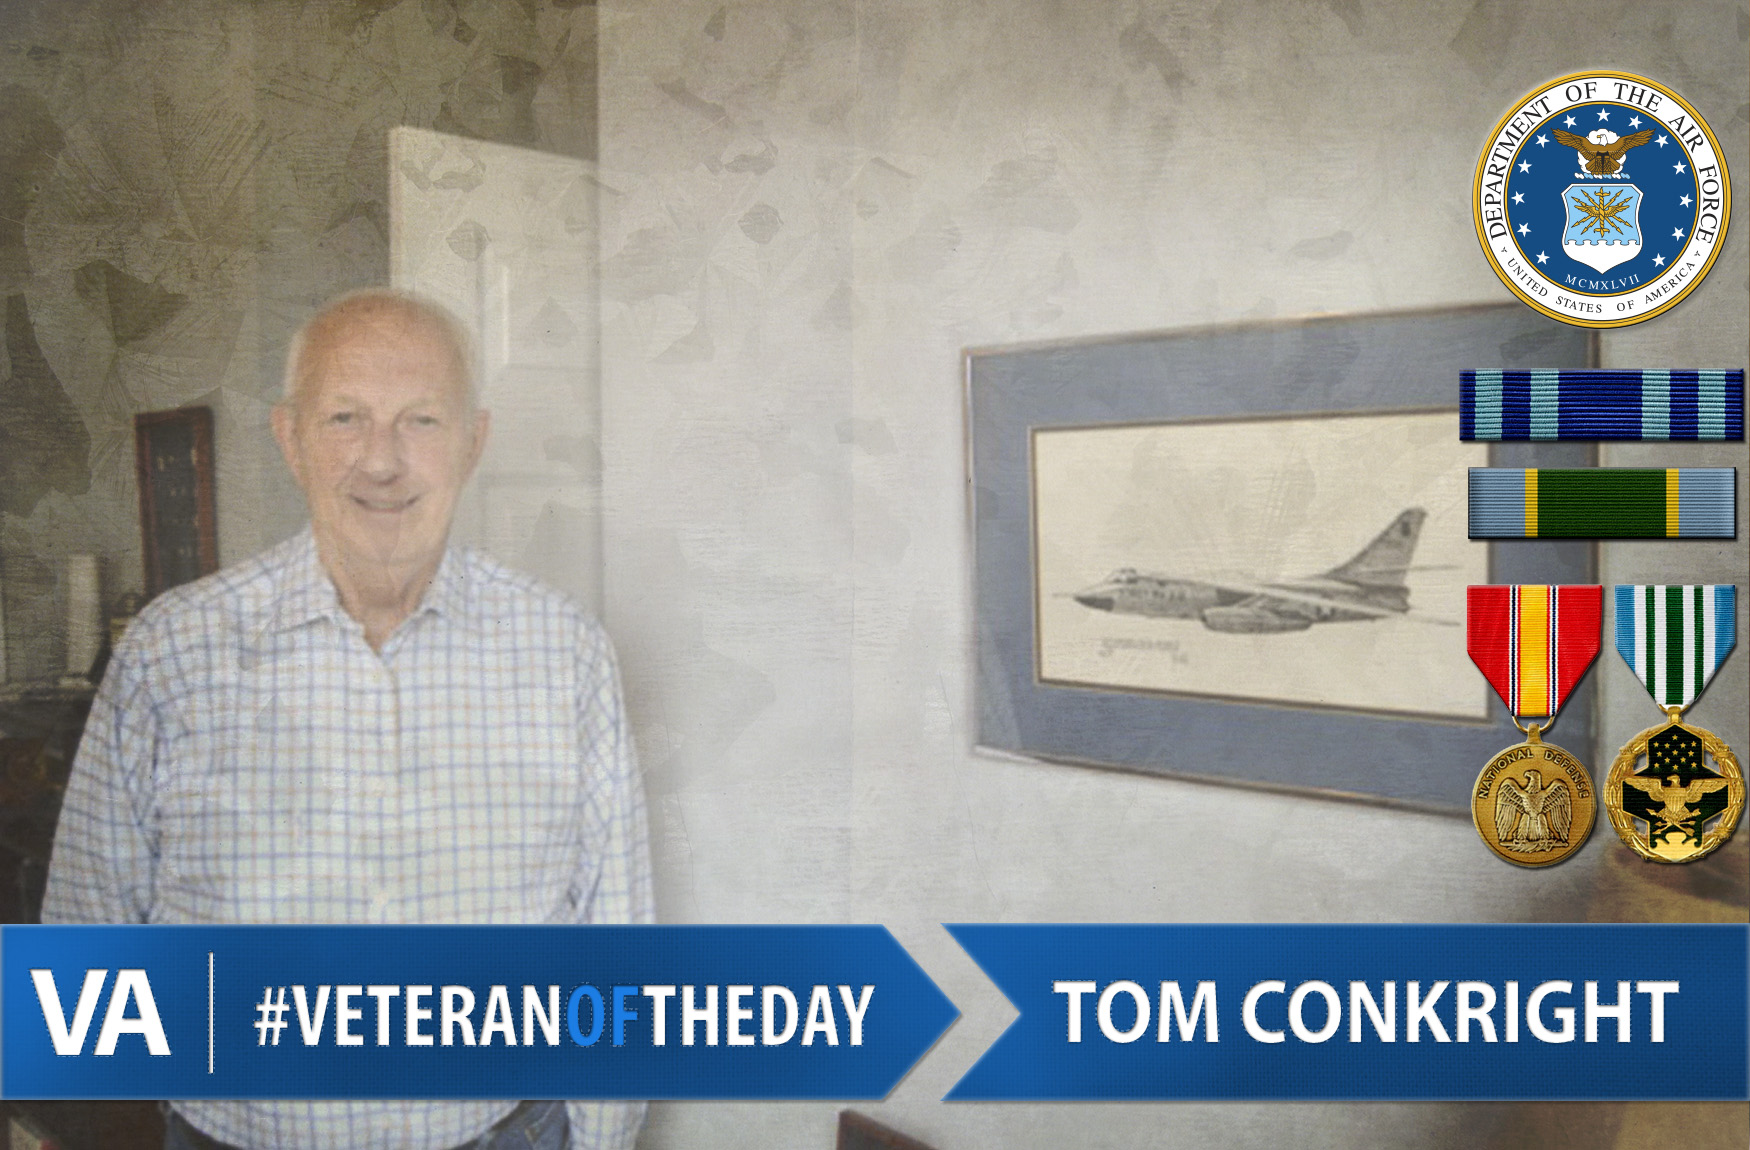 Veteran of the Day Tom Conkright